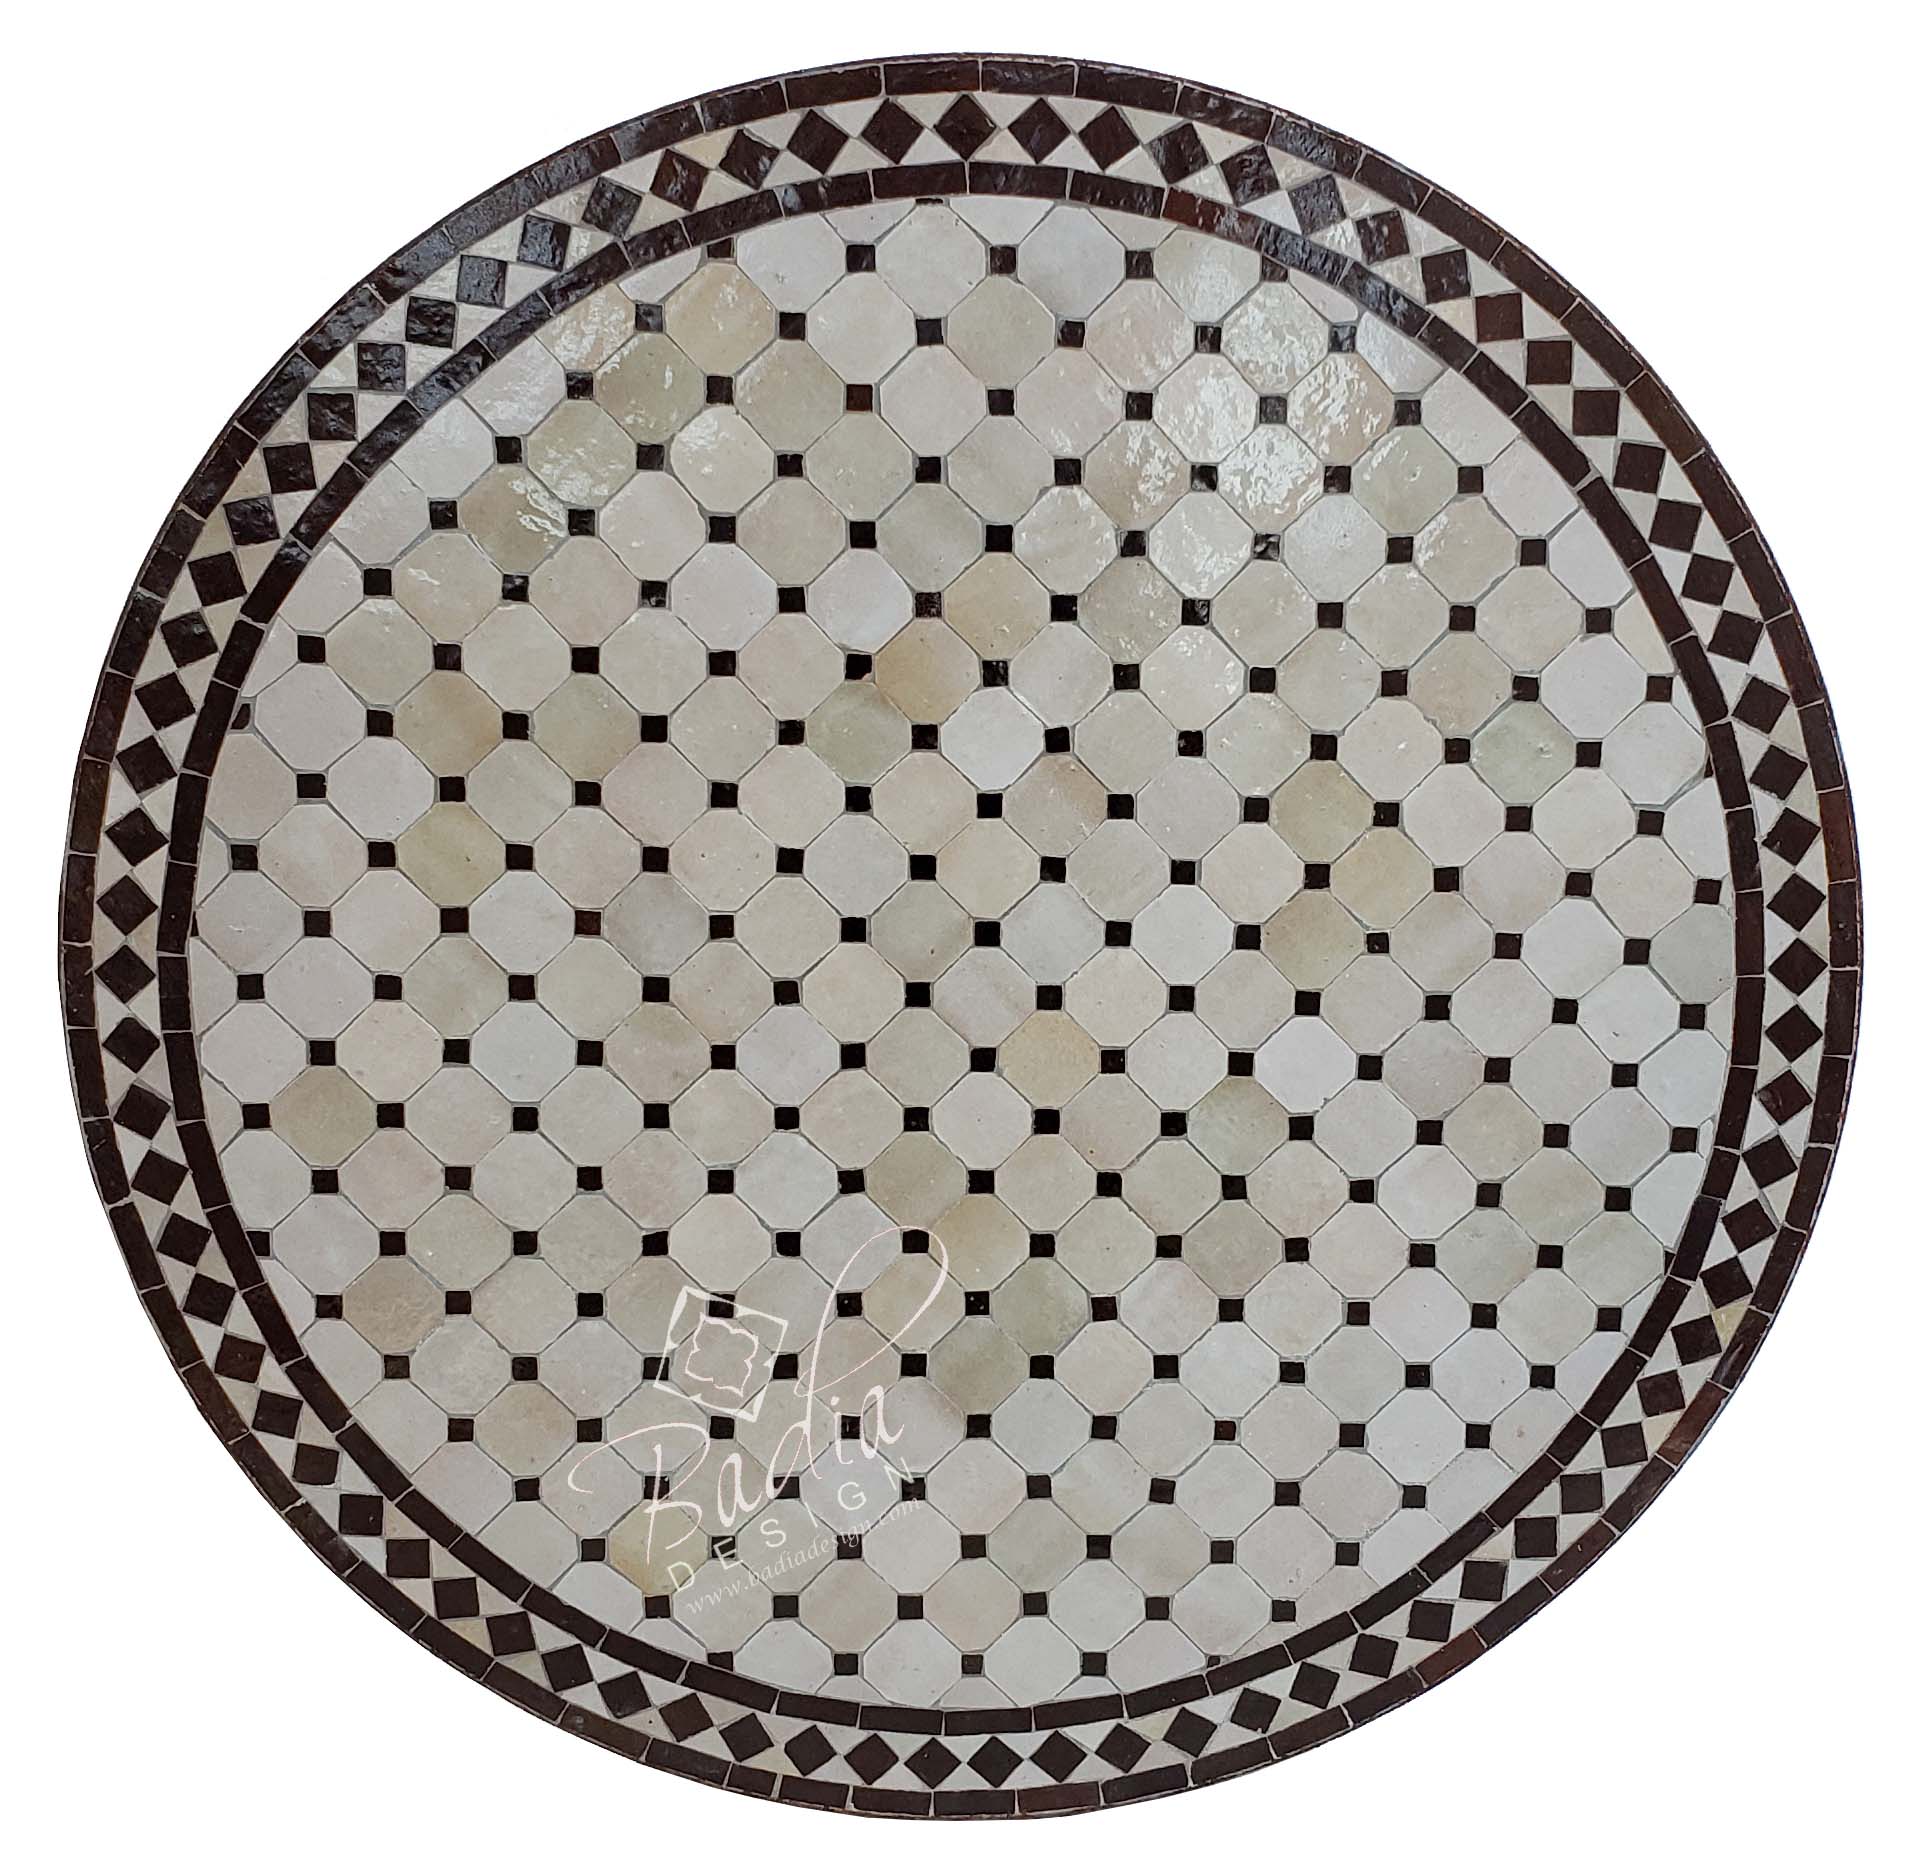 moroccan-mosaic-outdoor-ceramic-tile-table-top-mtr467.jpg